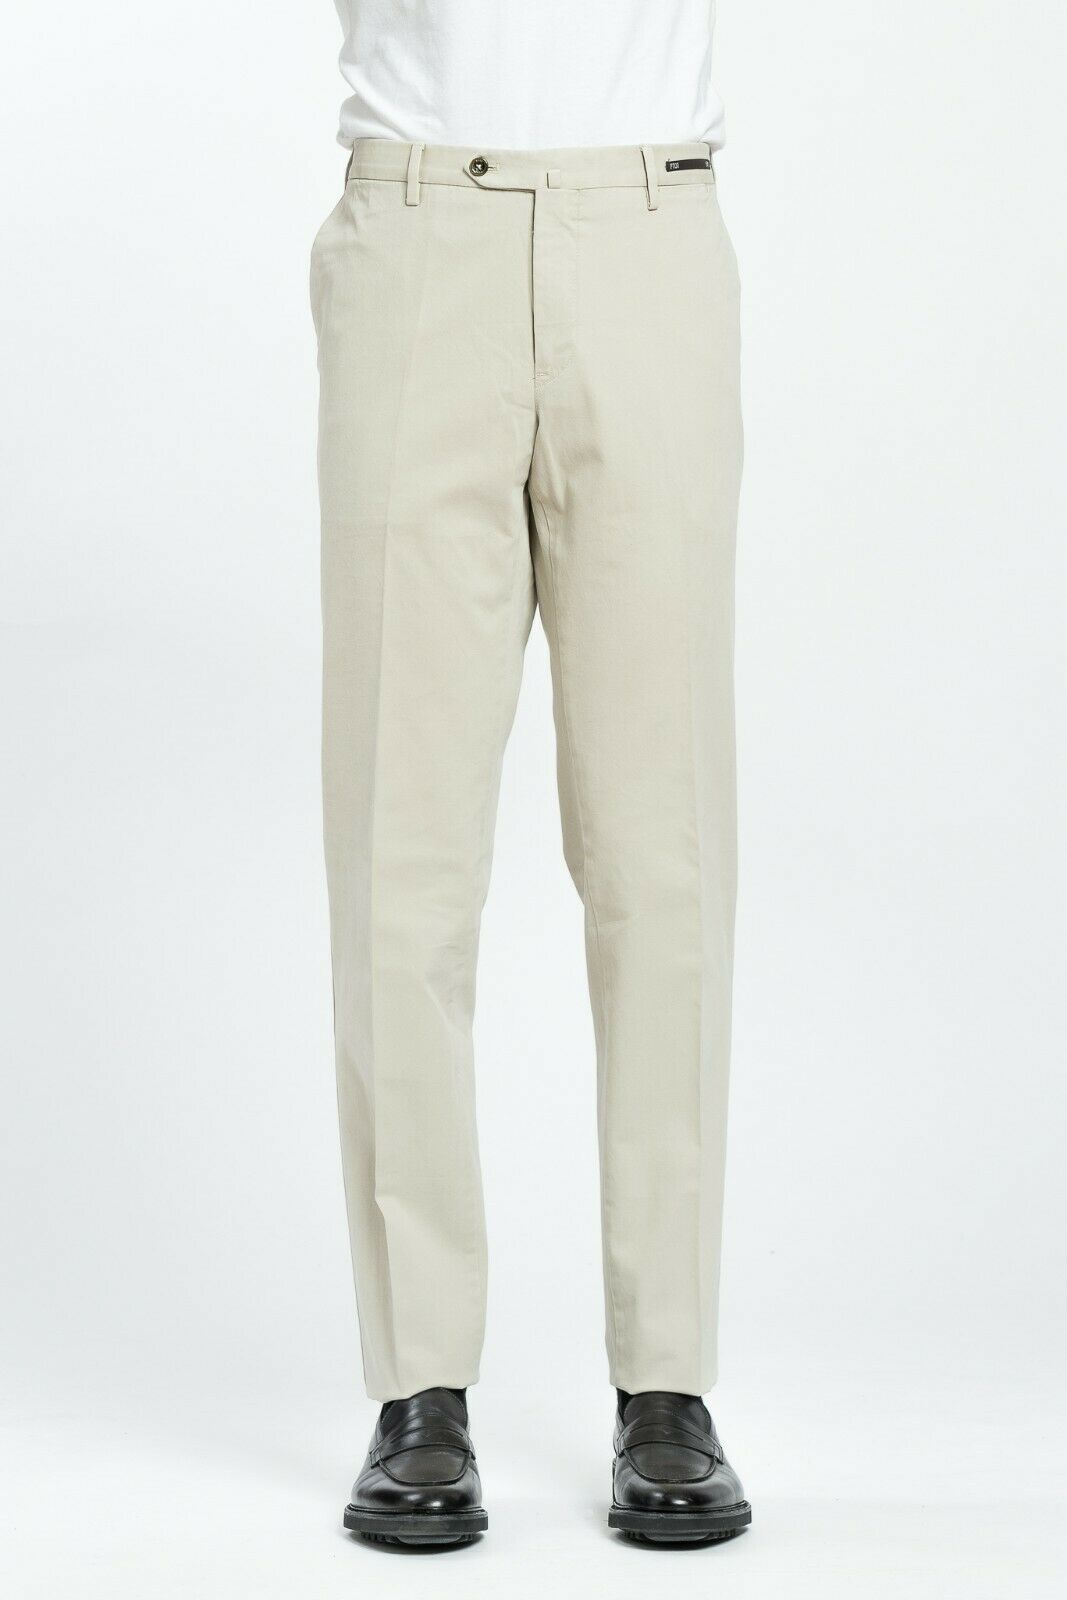 270$ PT01 NORTHERN LIGHTS Beige Trousers Pants Winter Cotton Slim ...